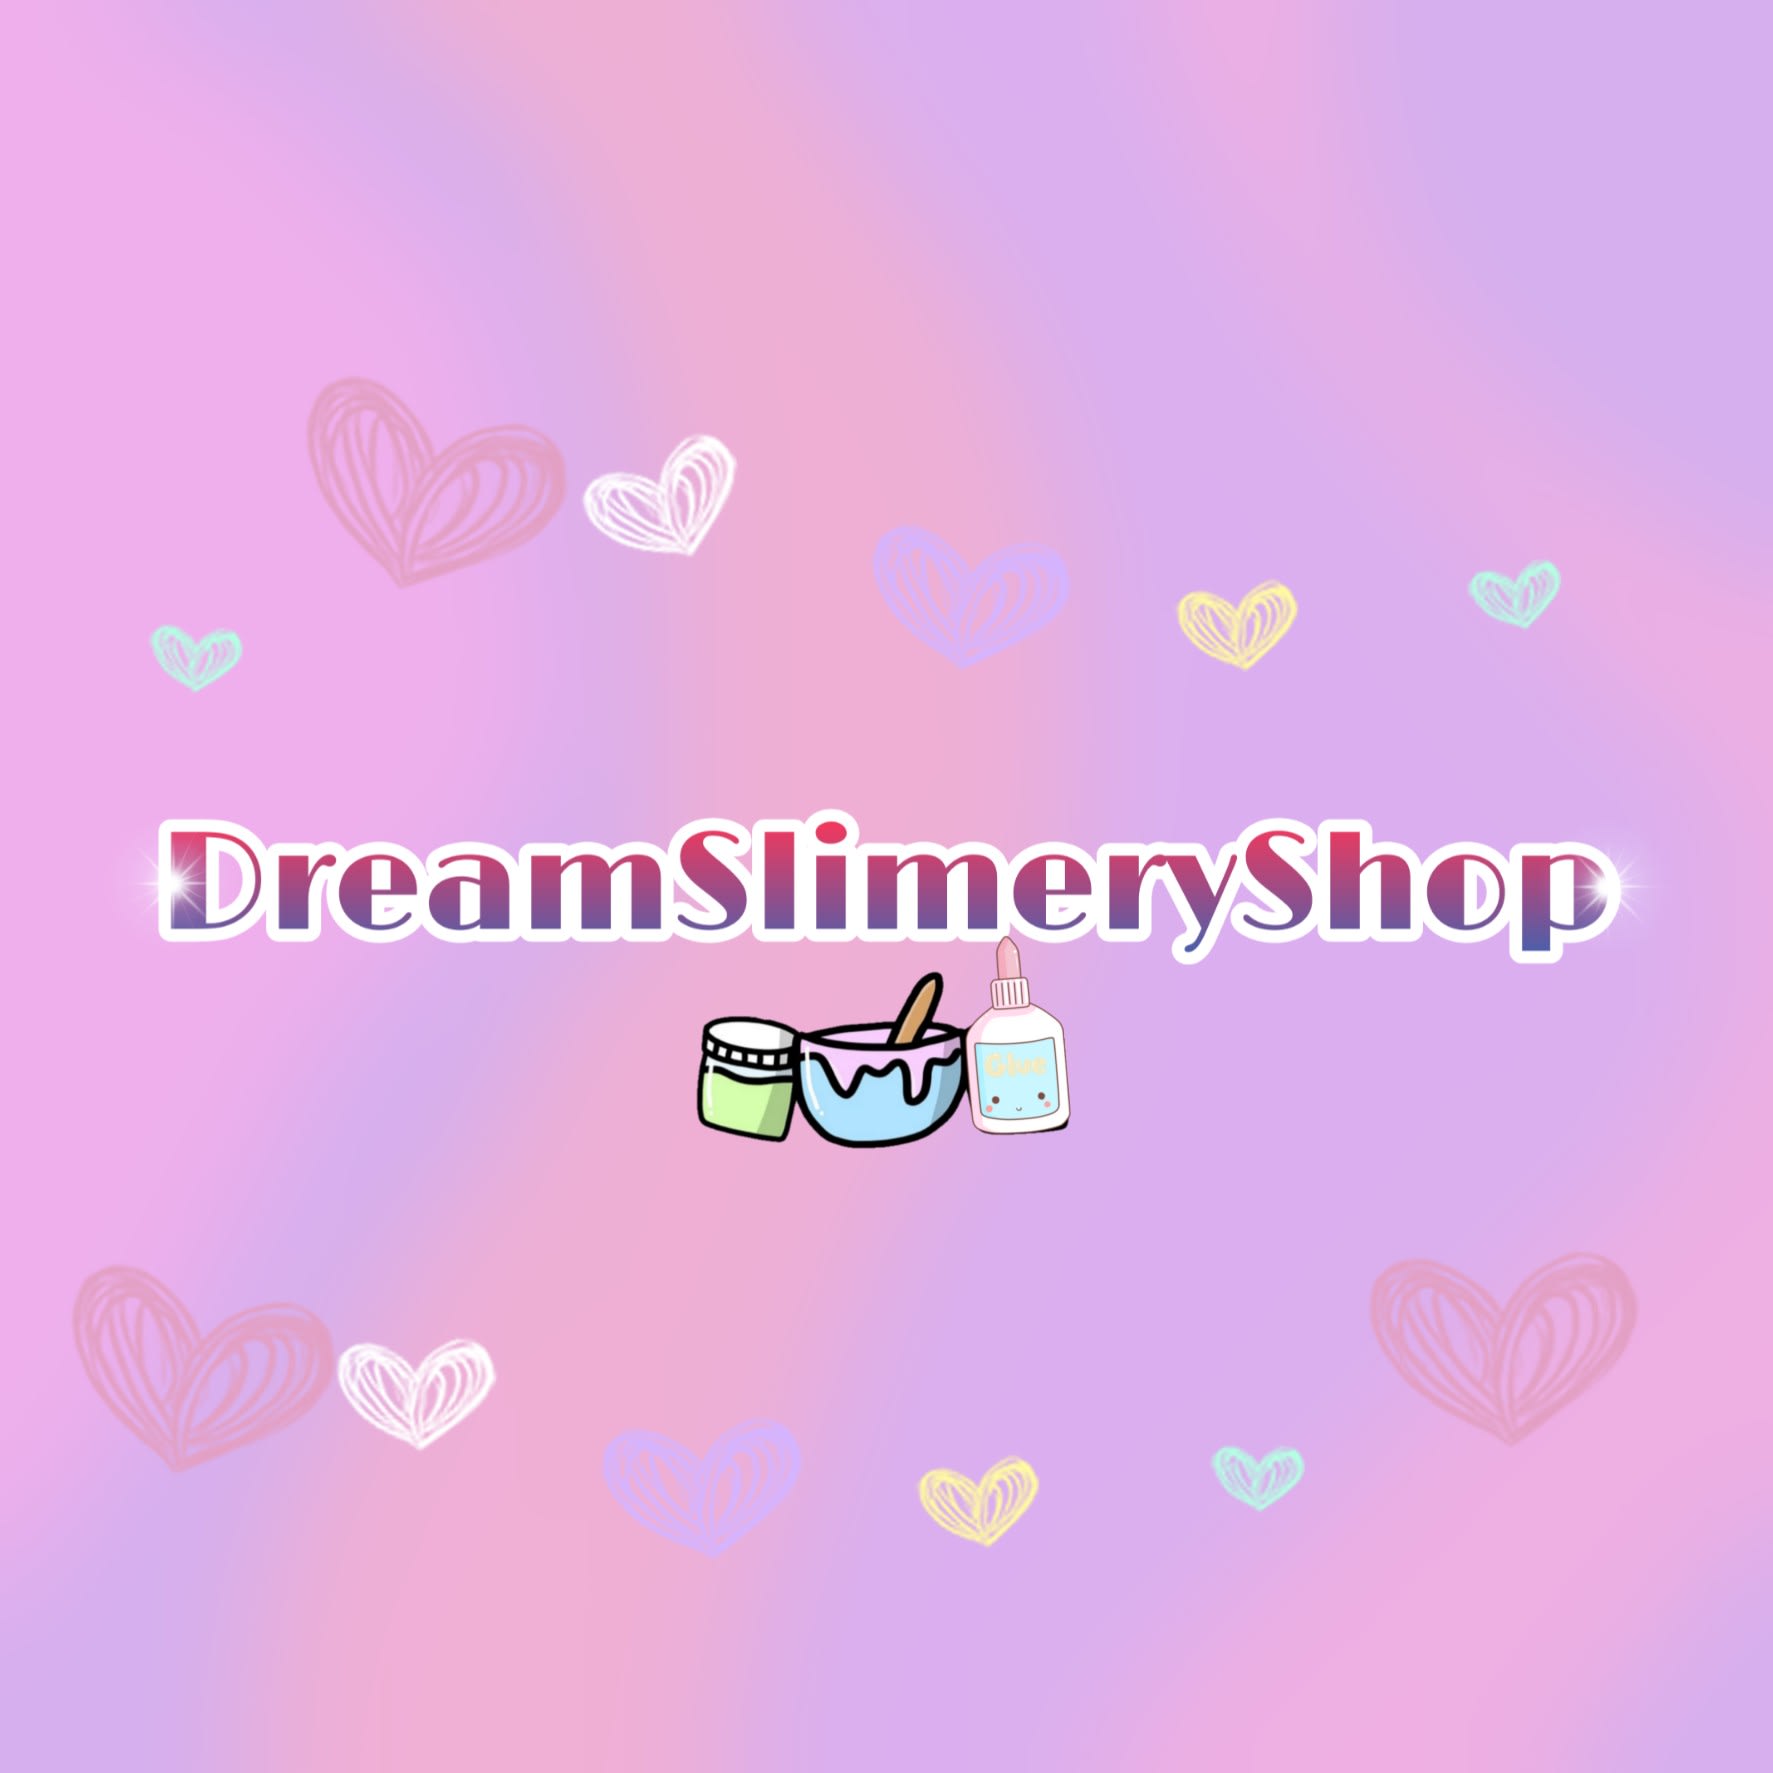 Dream Slimery Shop